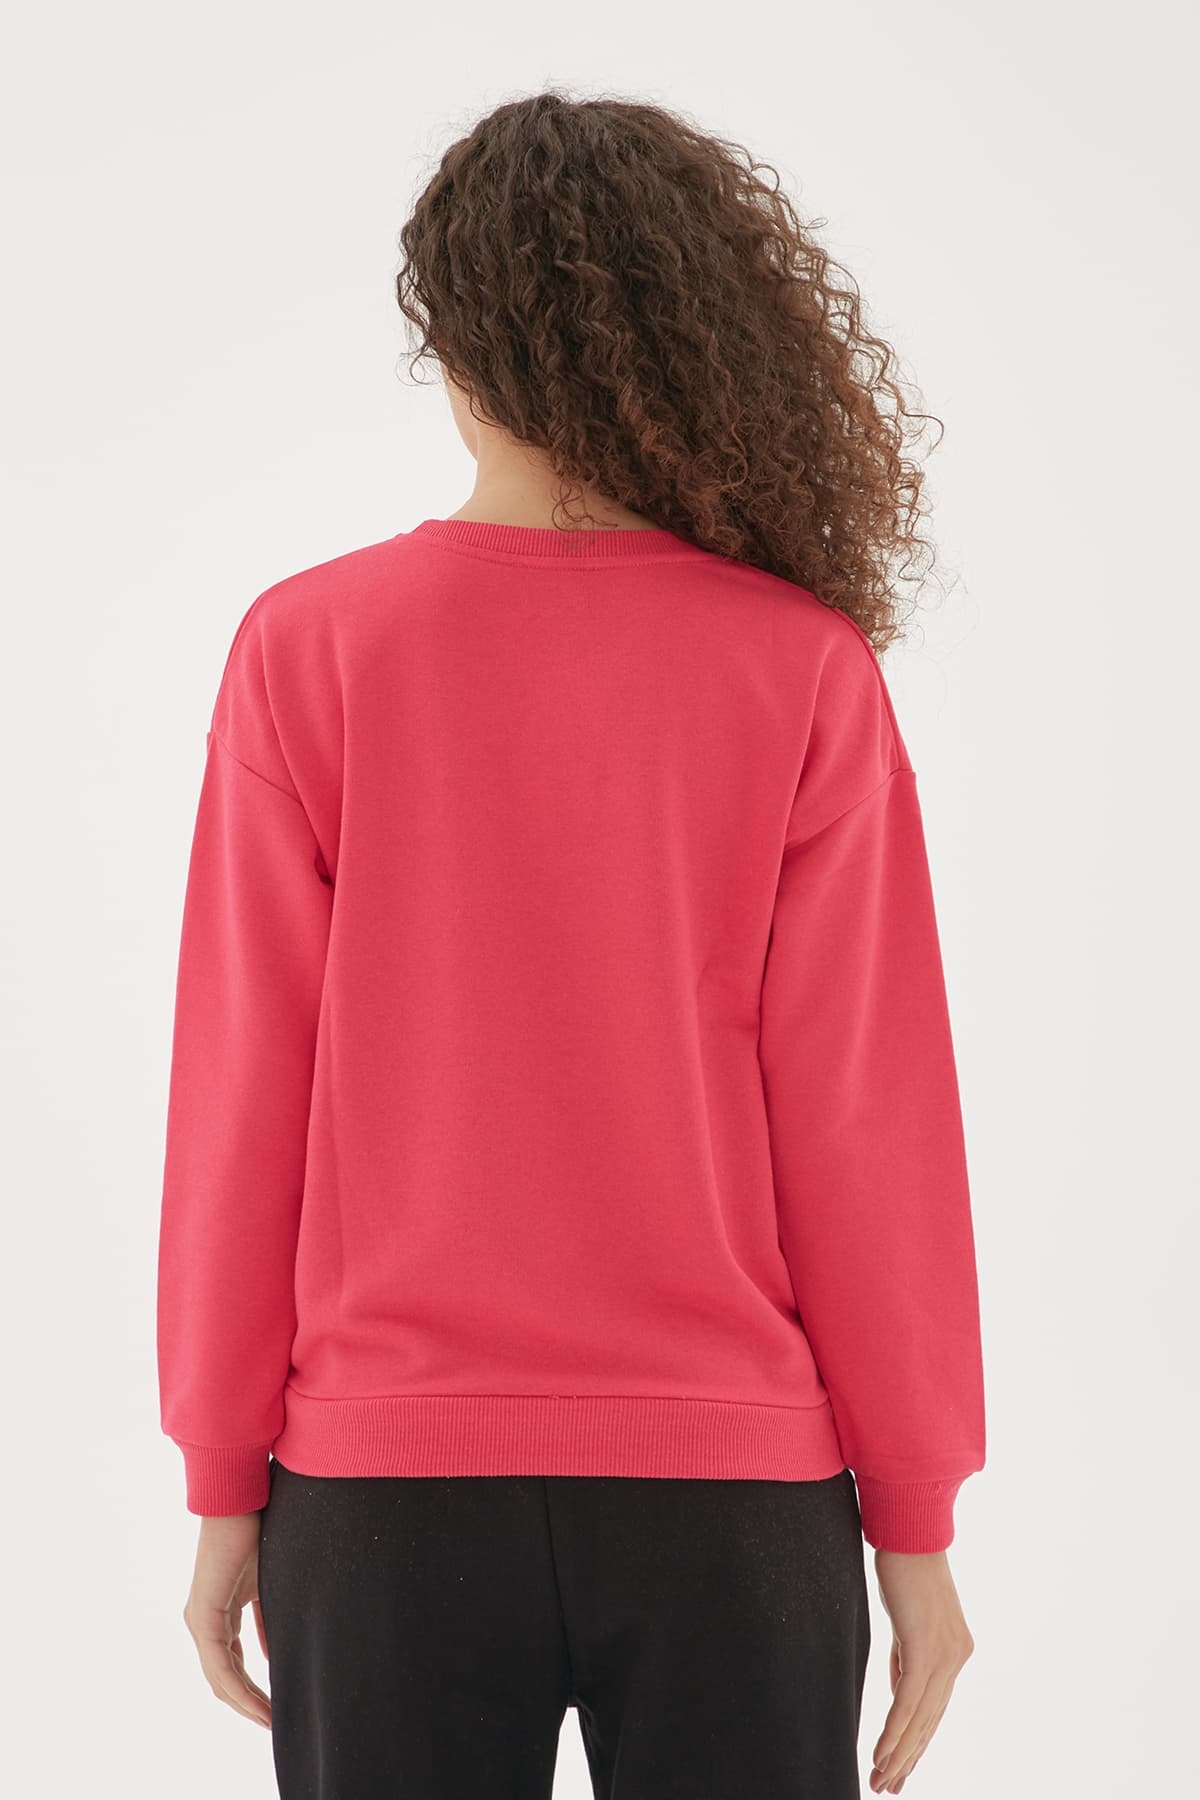 Baskılı Sweatshirt Fuşya / Fuchsia | Fashion Friends